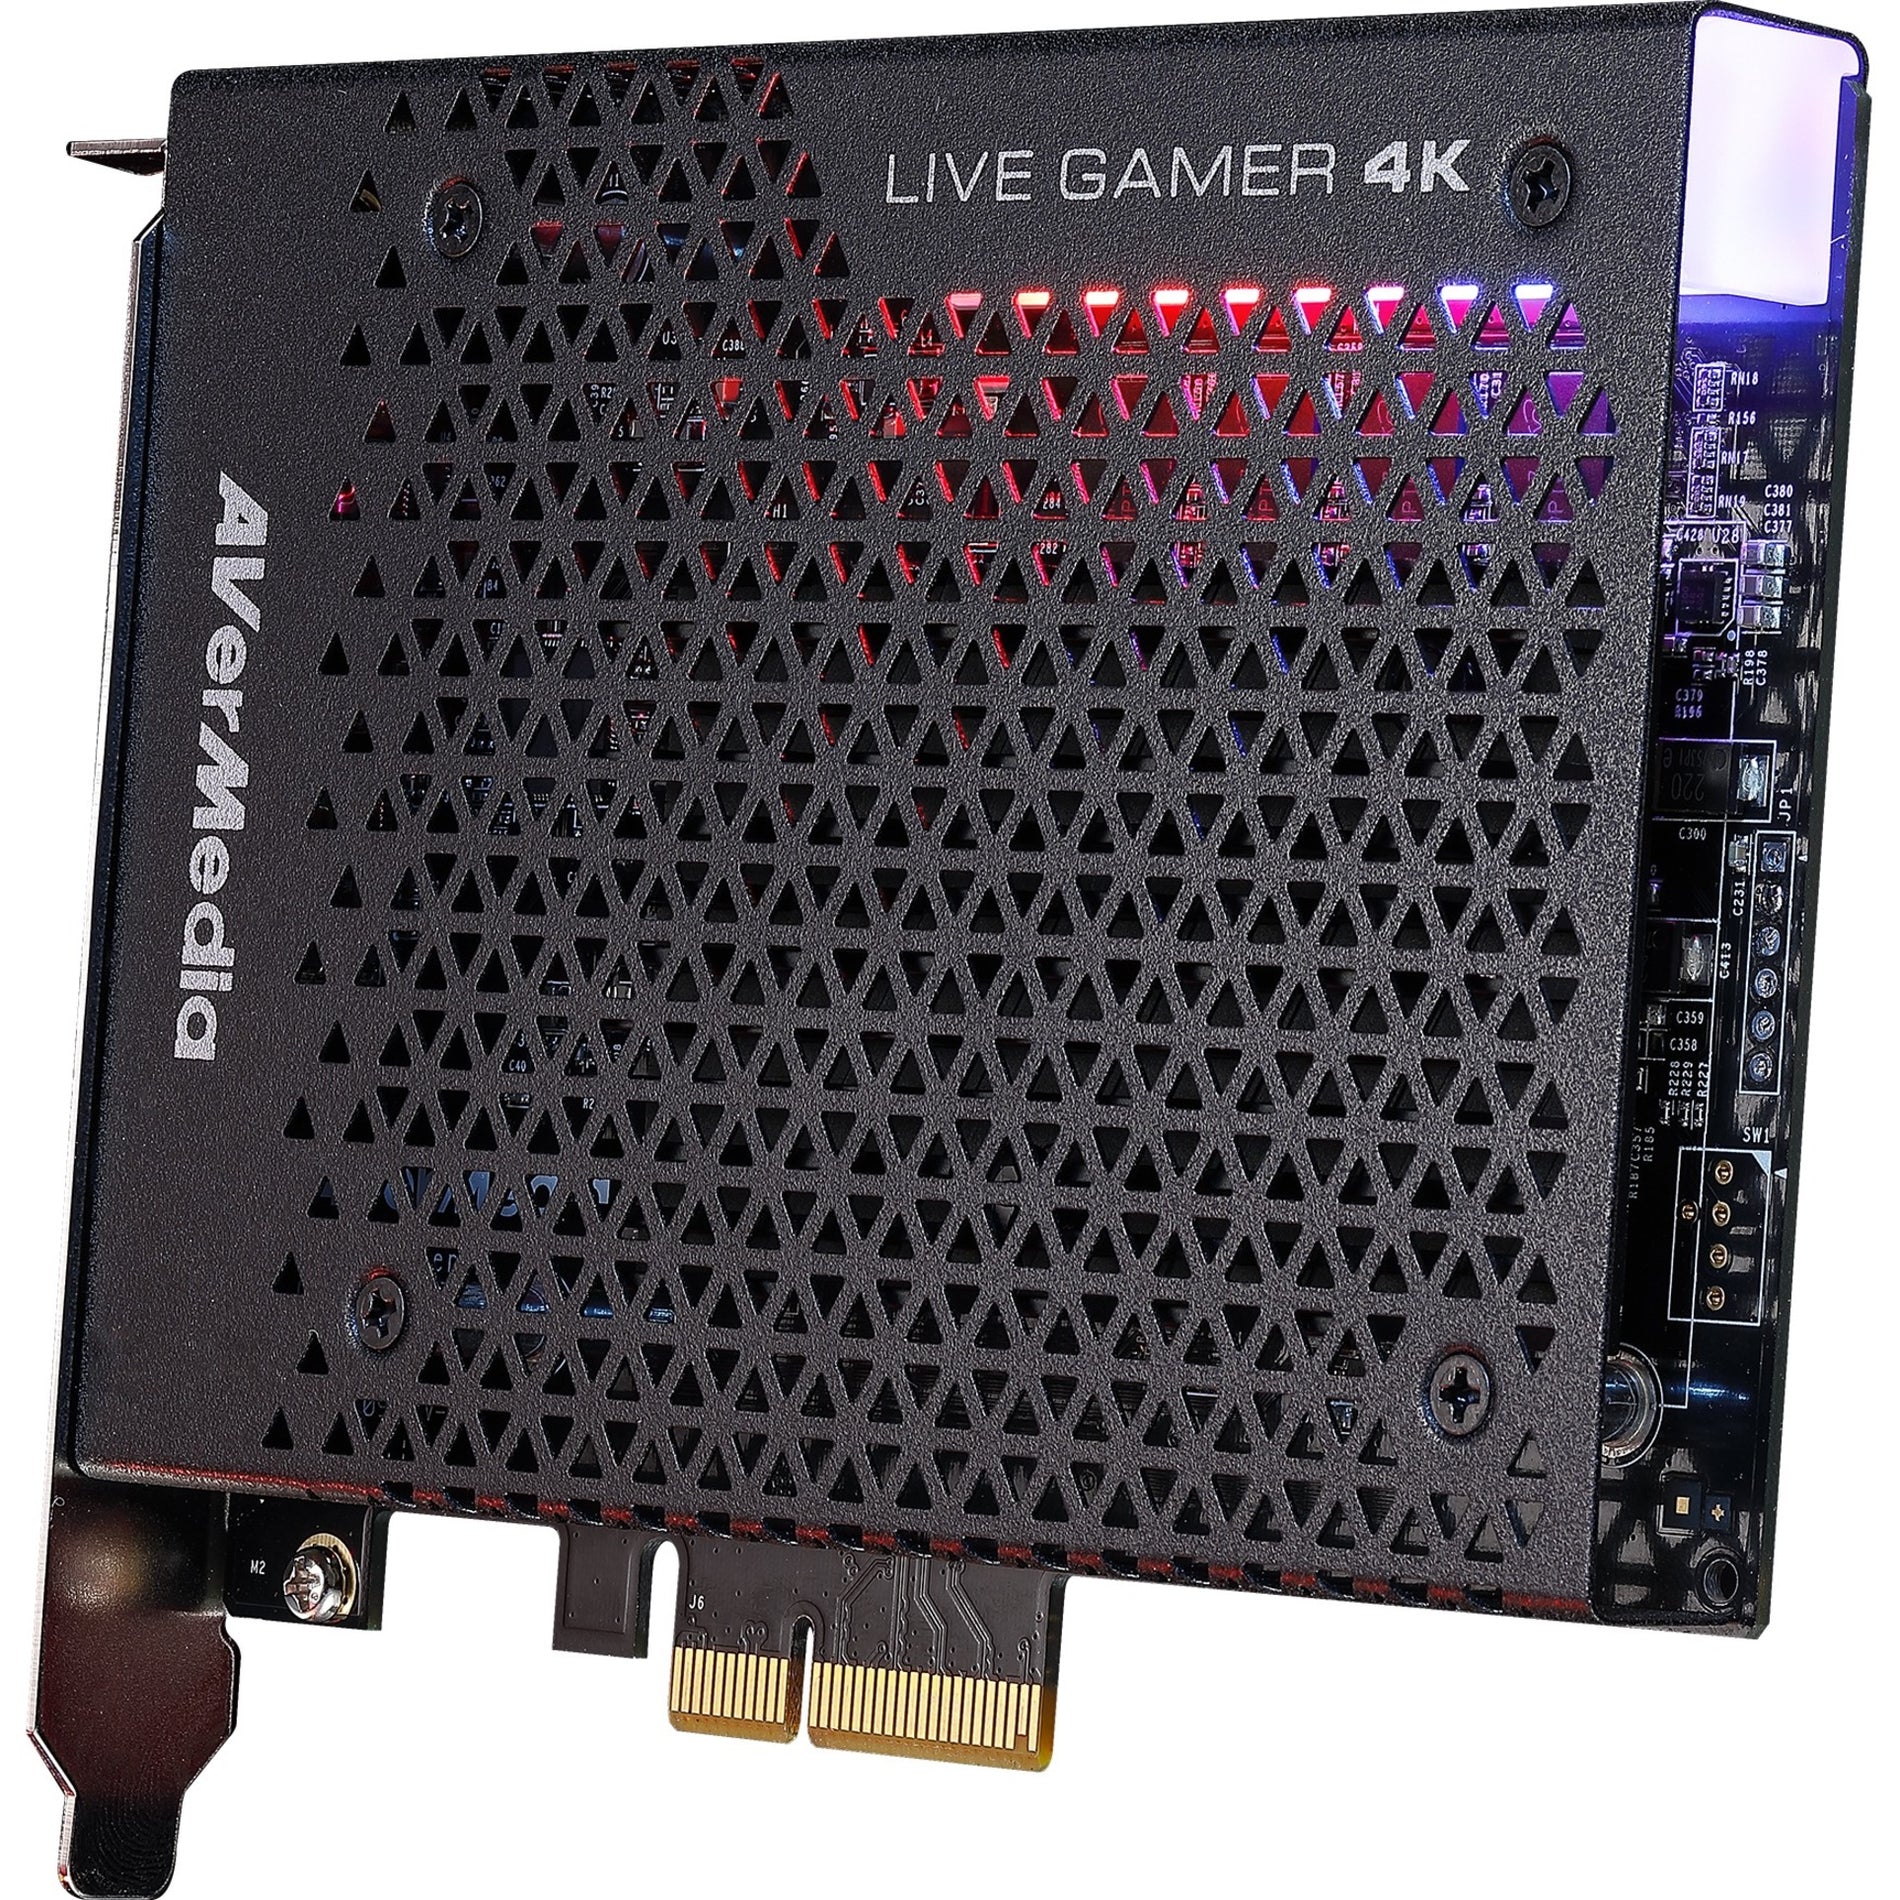 AVerMedia GC573 Live Gamer 4K Game Capturing Device, Video Game Streaming